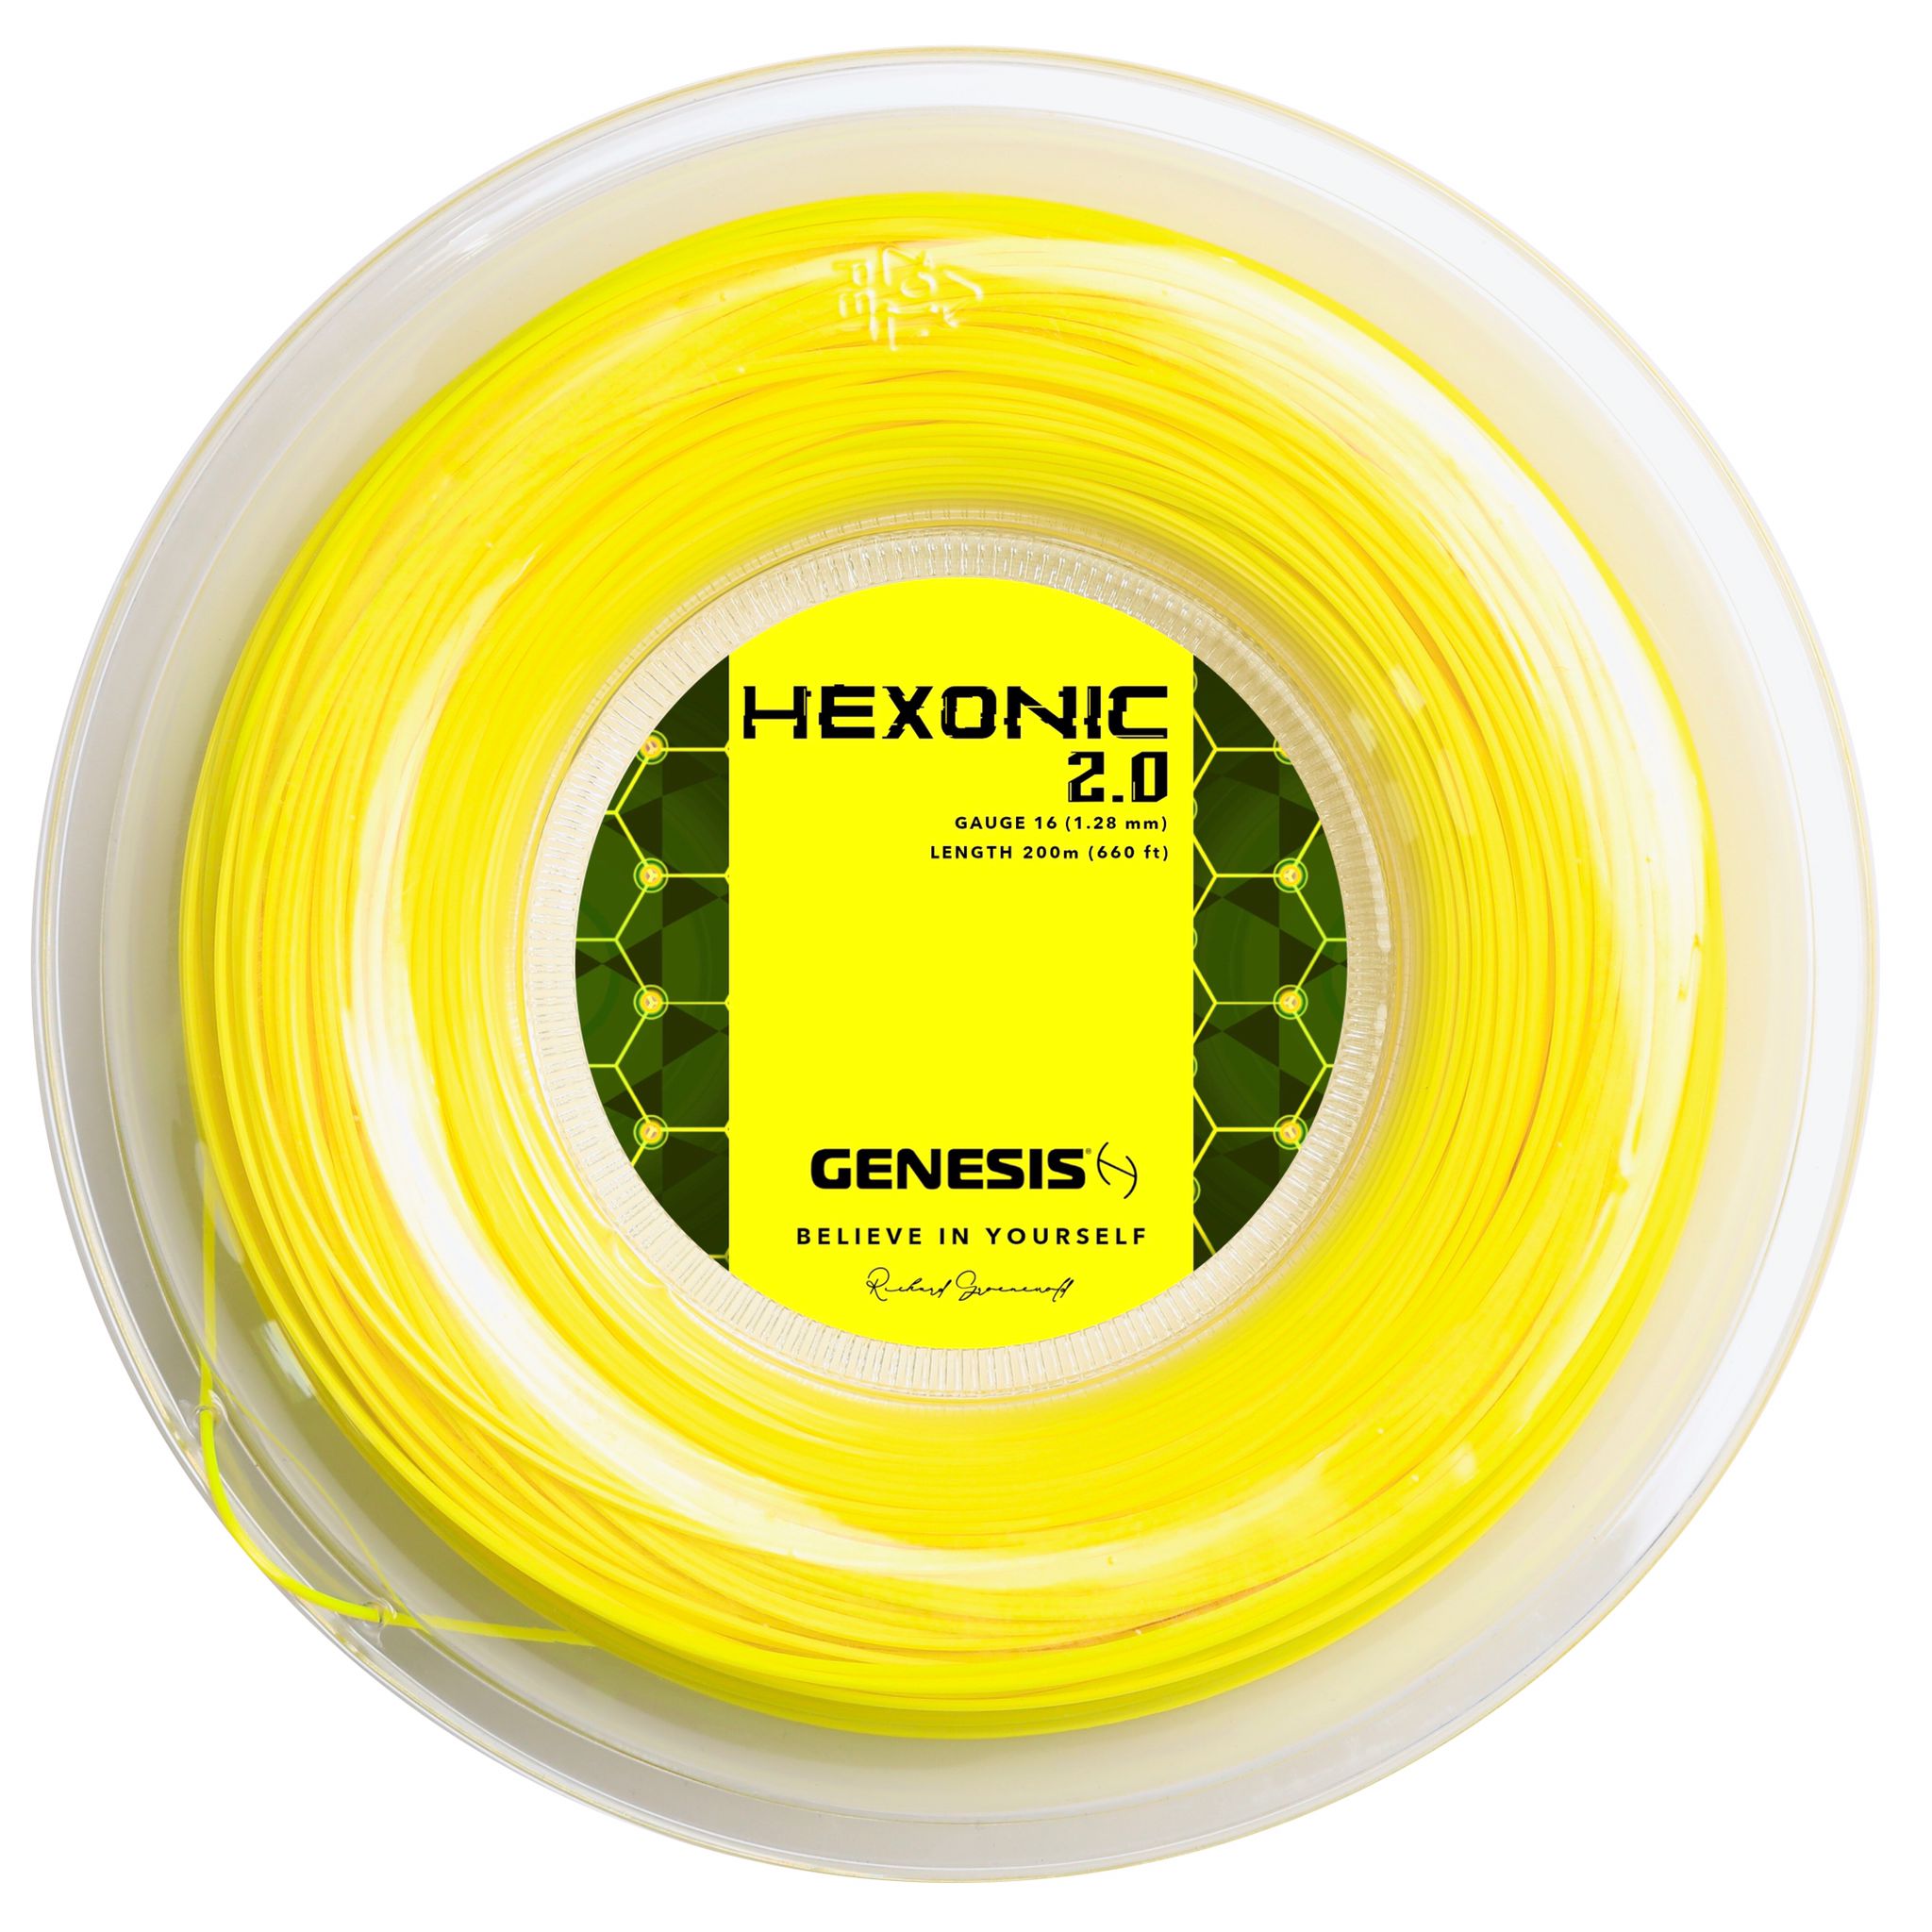 Genesis Hexonic 2.0 Green 17G Tennis String